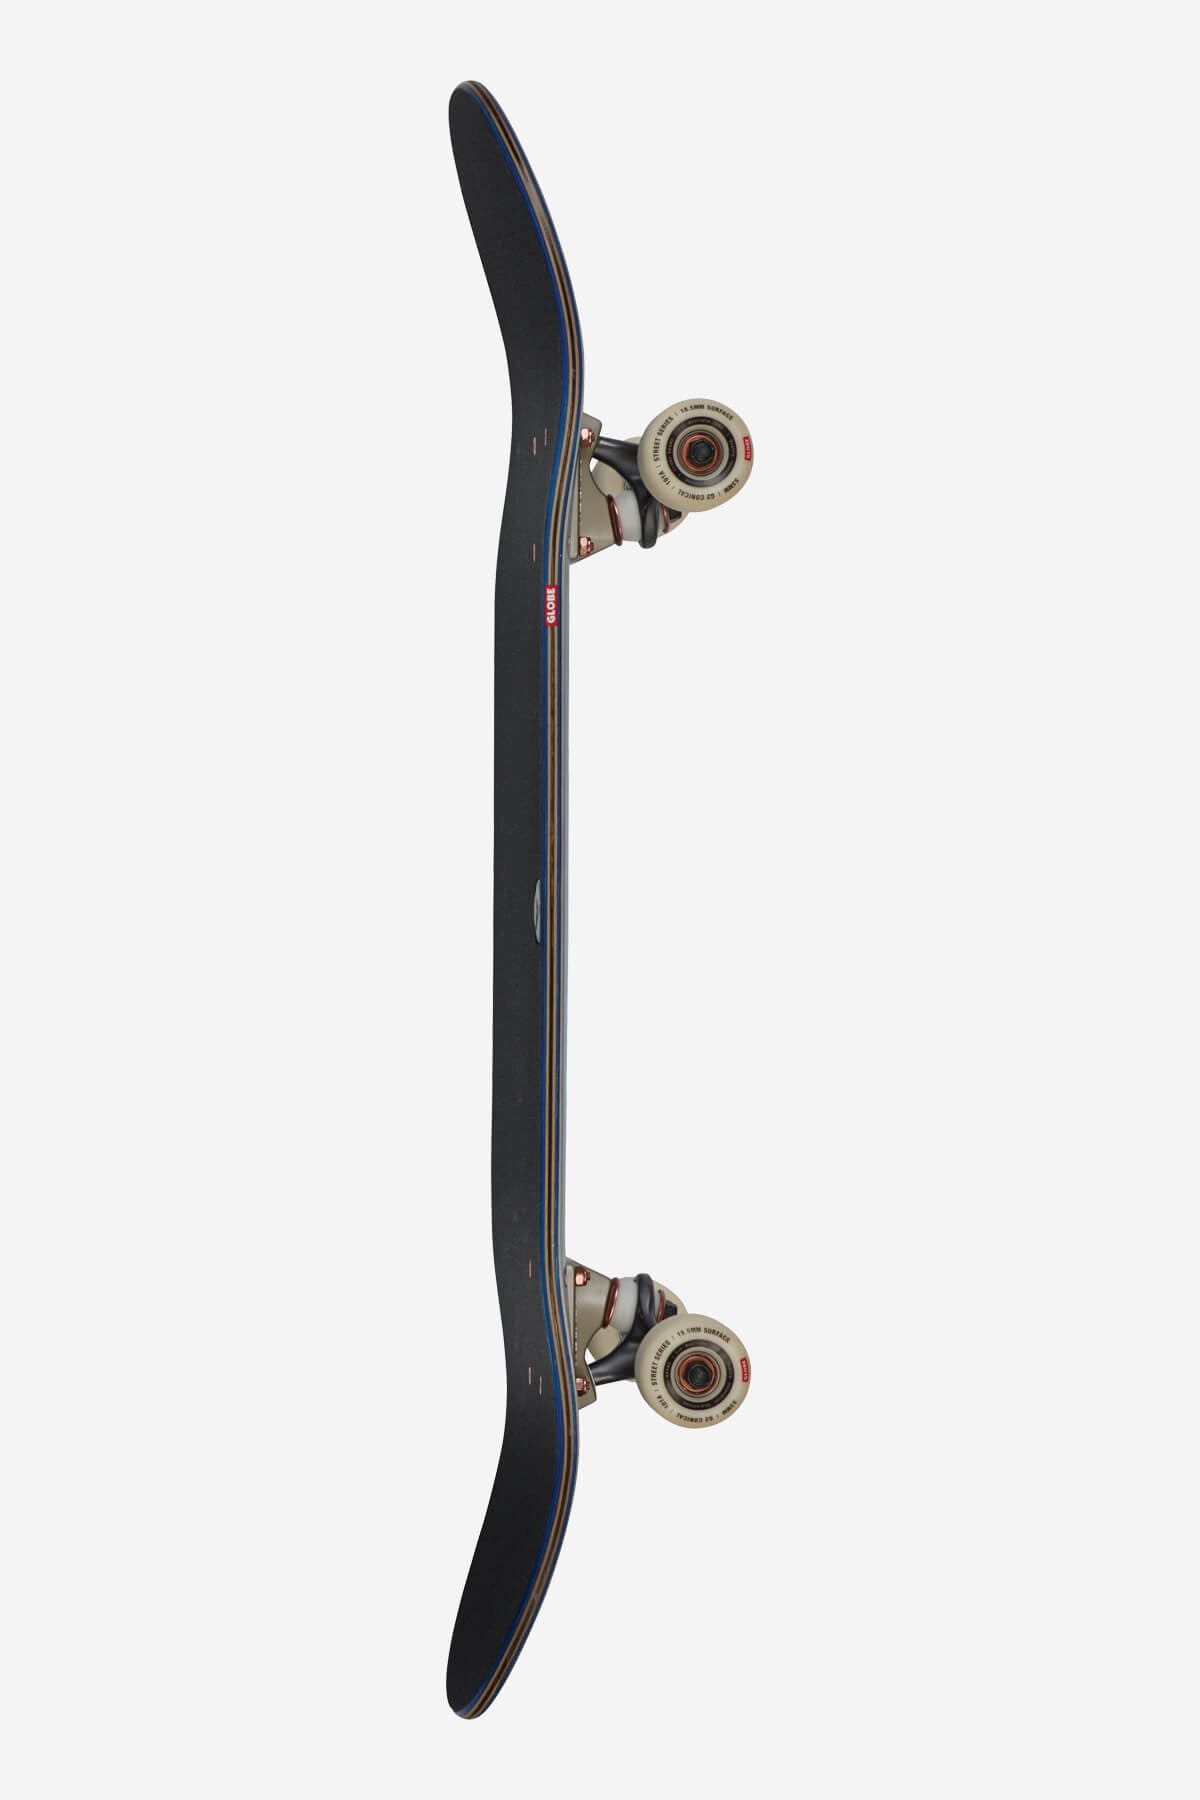 g2 rholtsu scorps 8.0" complete skateboard